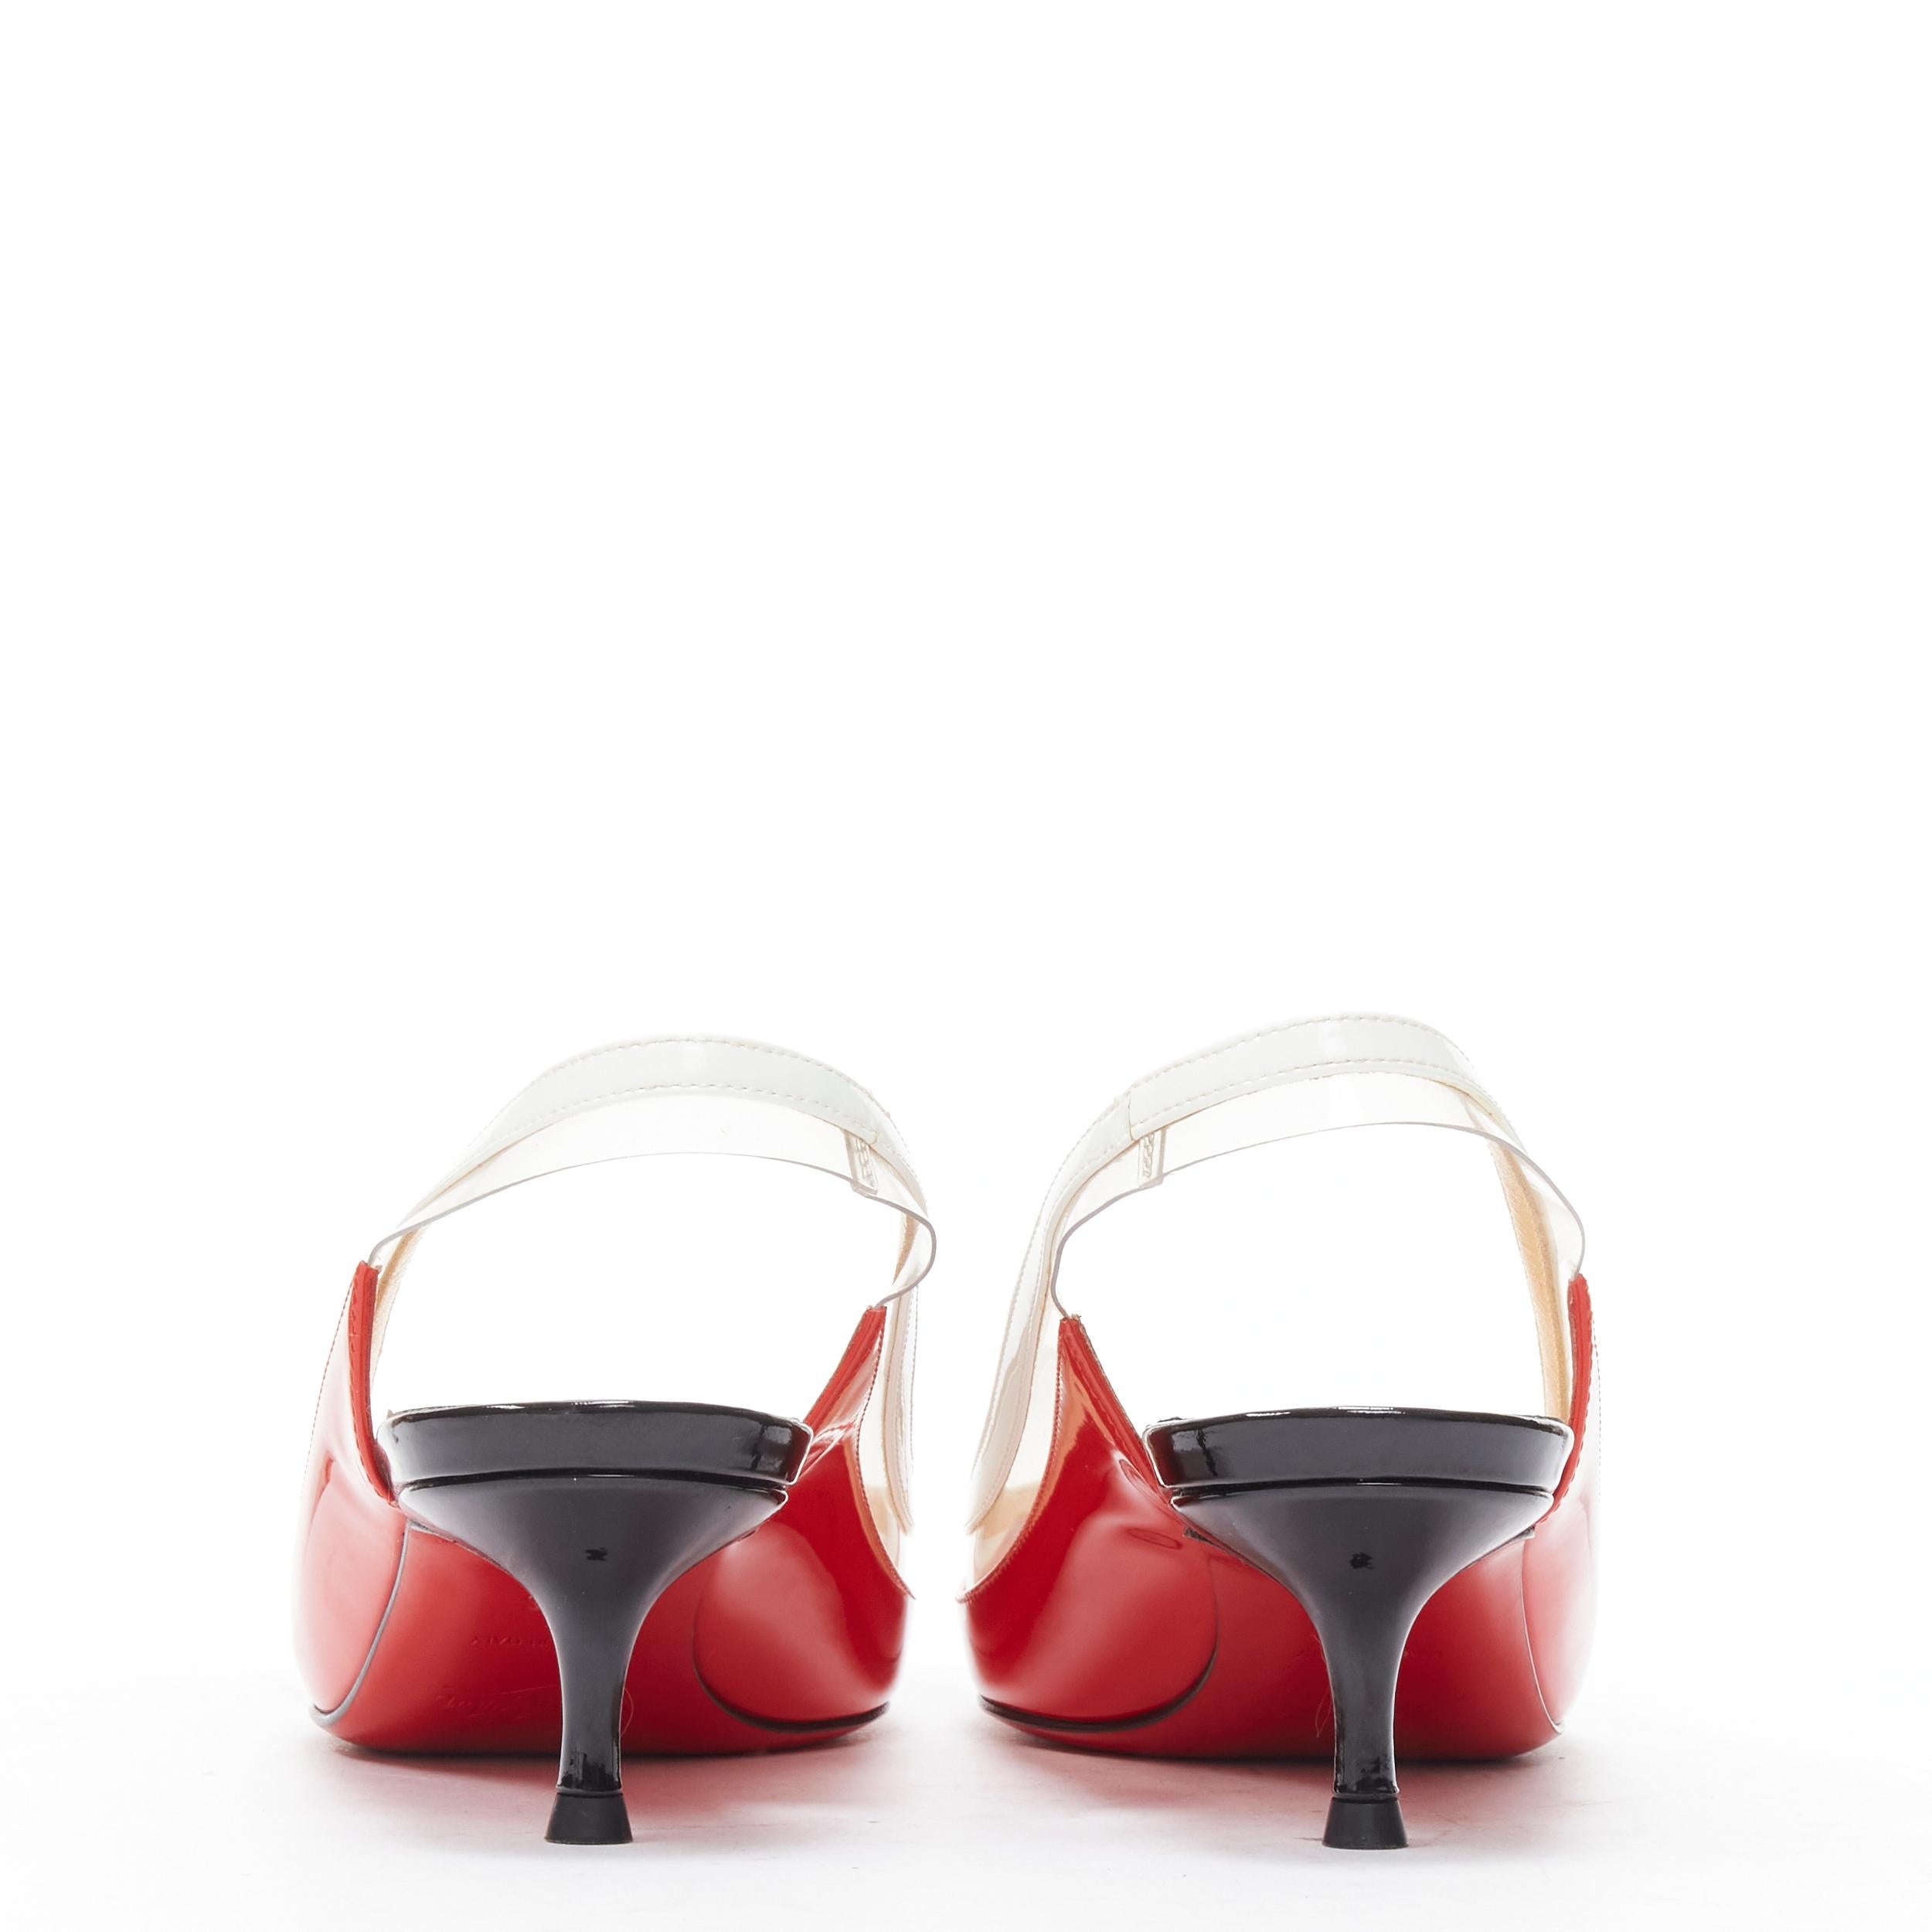 red patent kitten heels